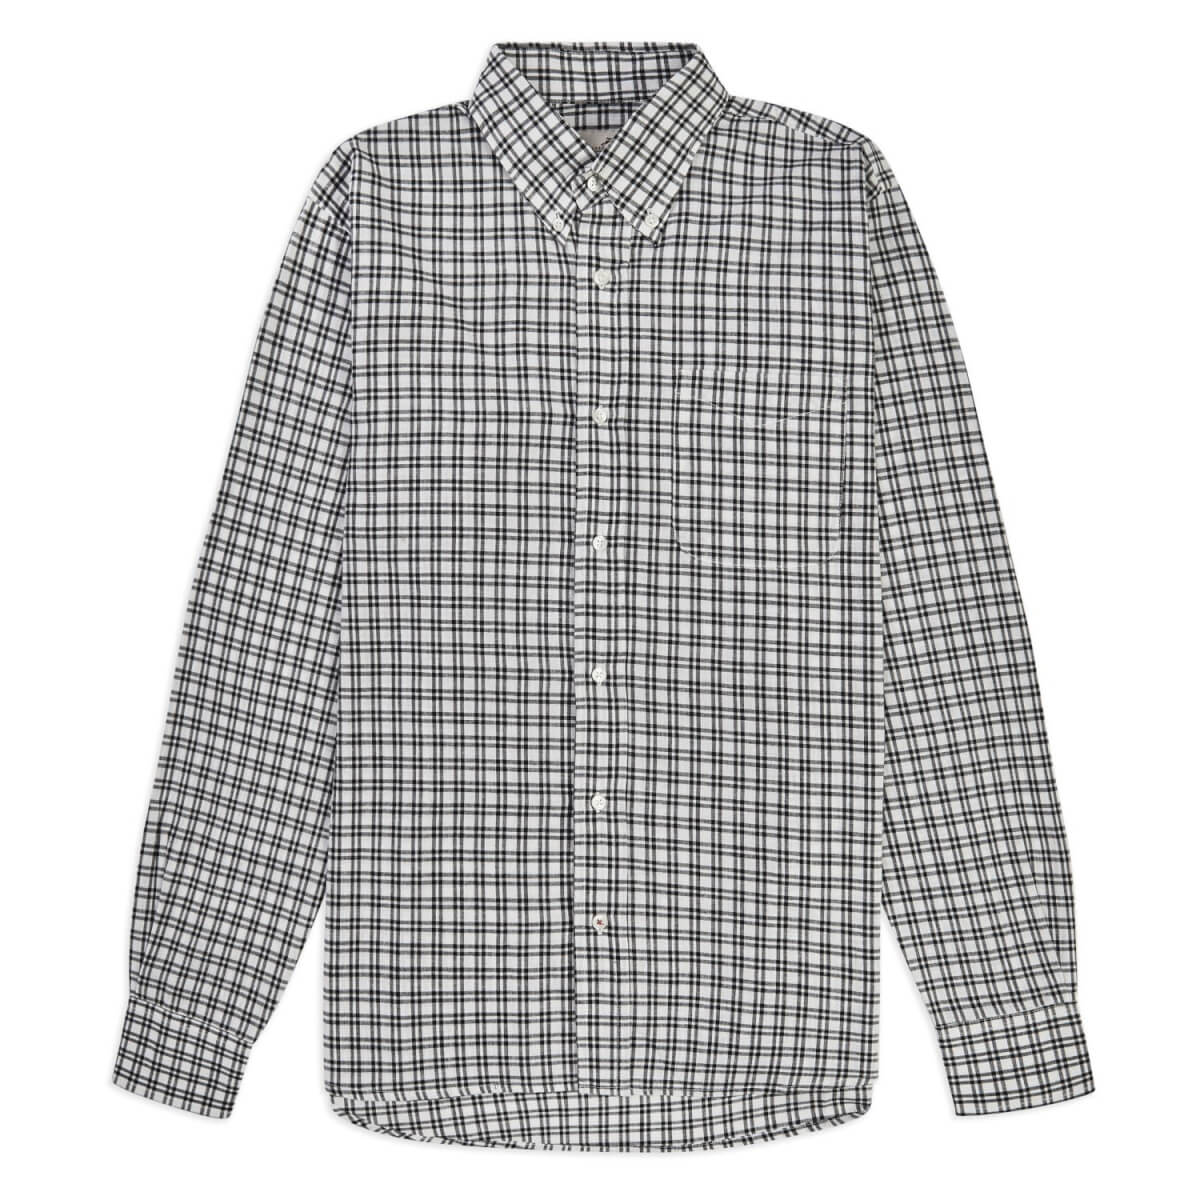 Men's Check Button Down Shirt - Black & White Small Burrows & Hare